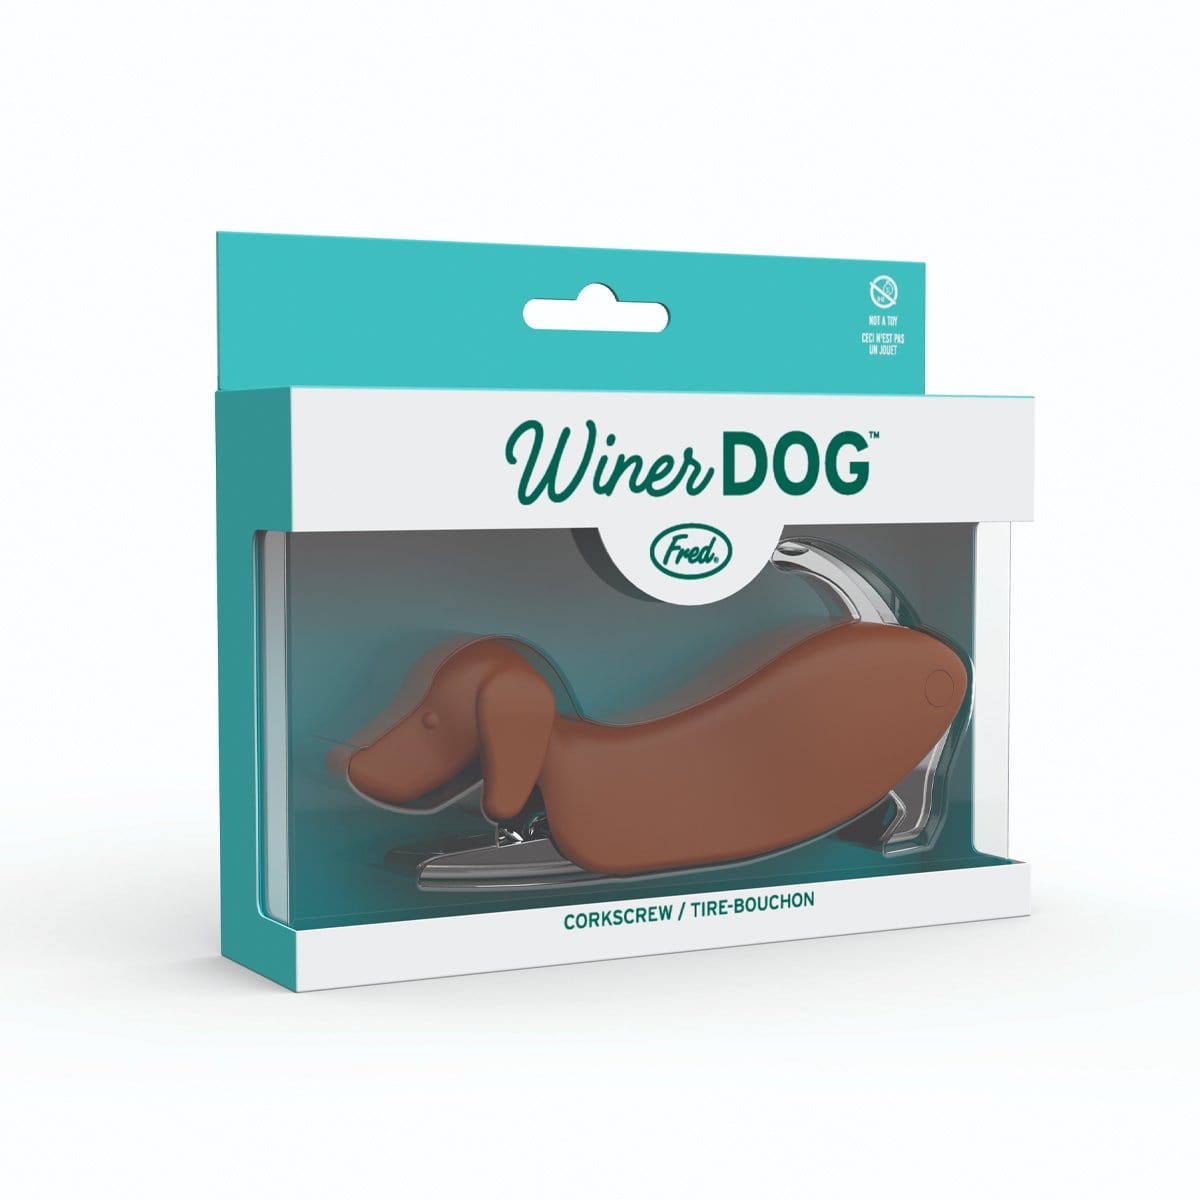 WINER DOG – Genuine Fred